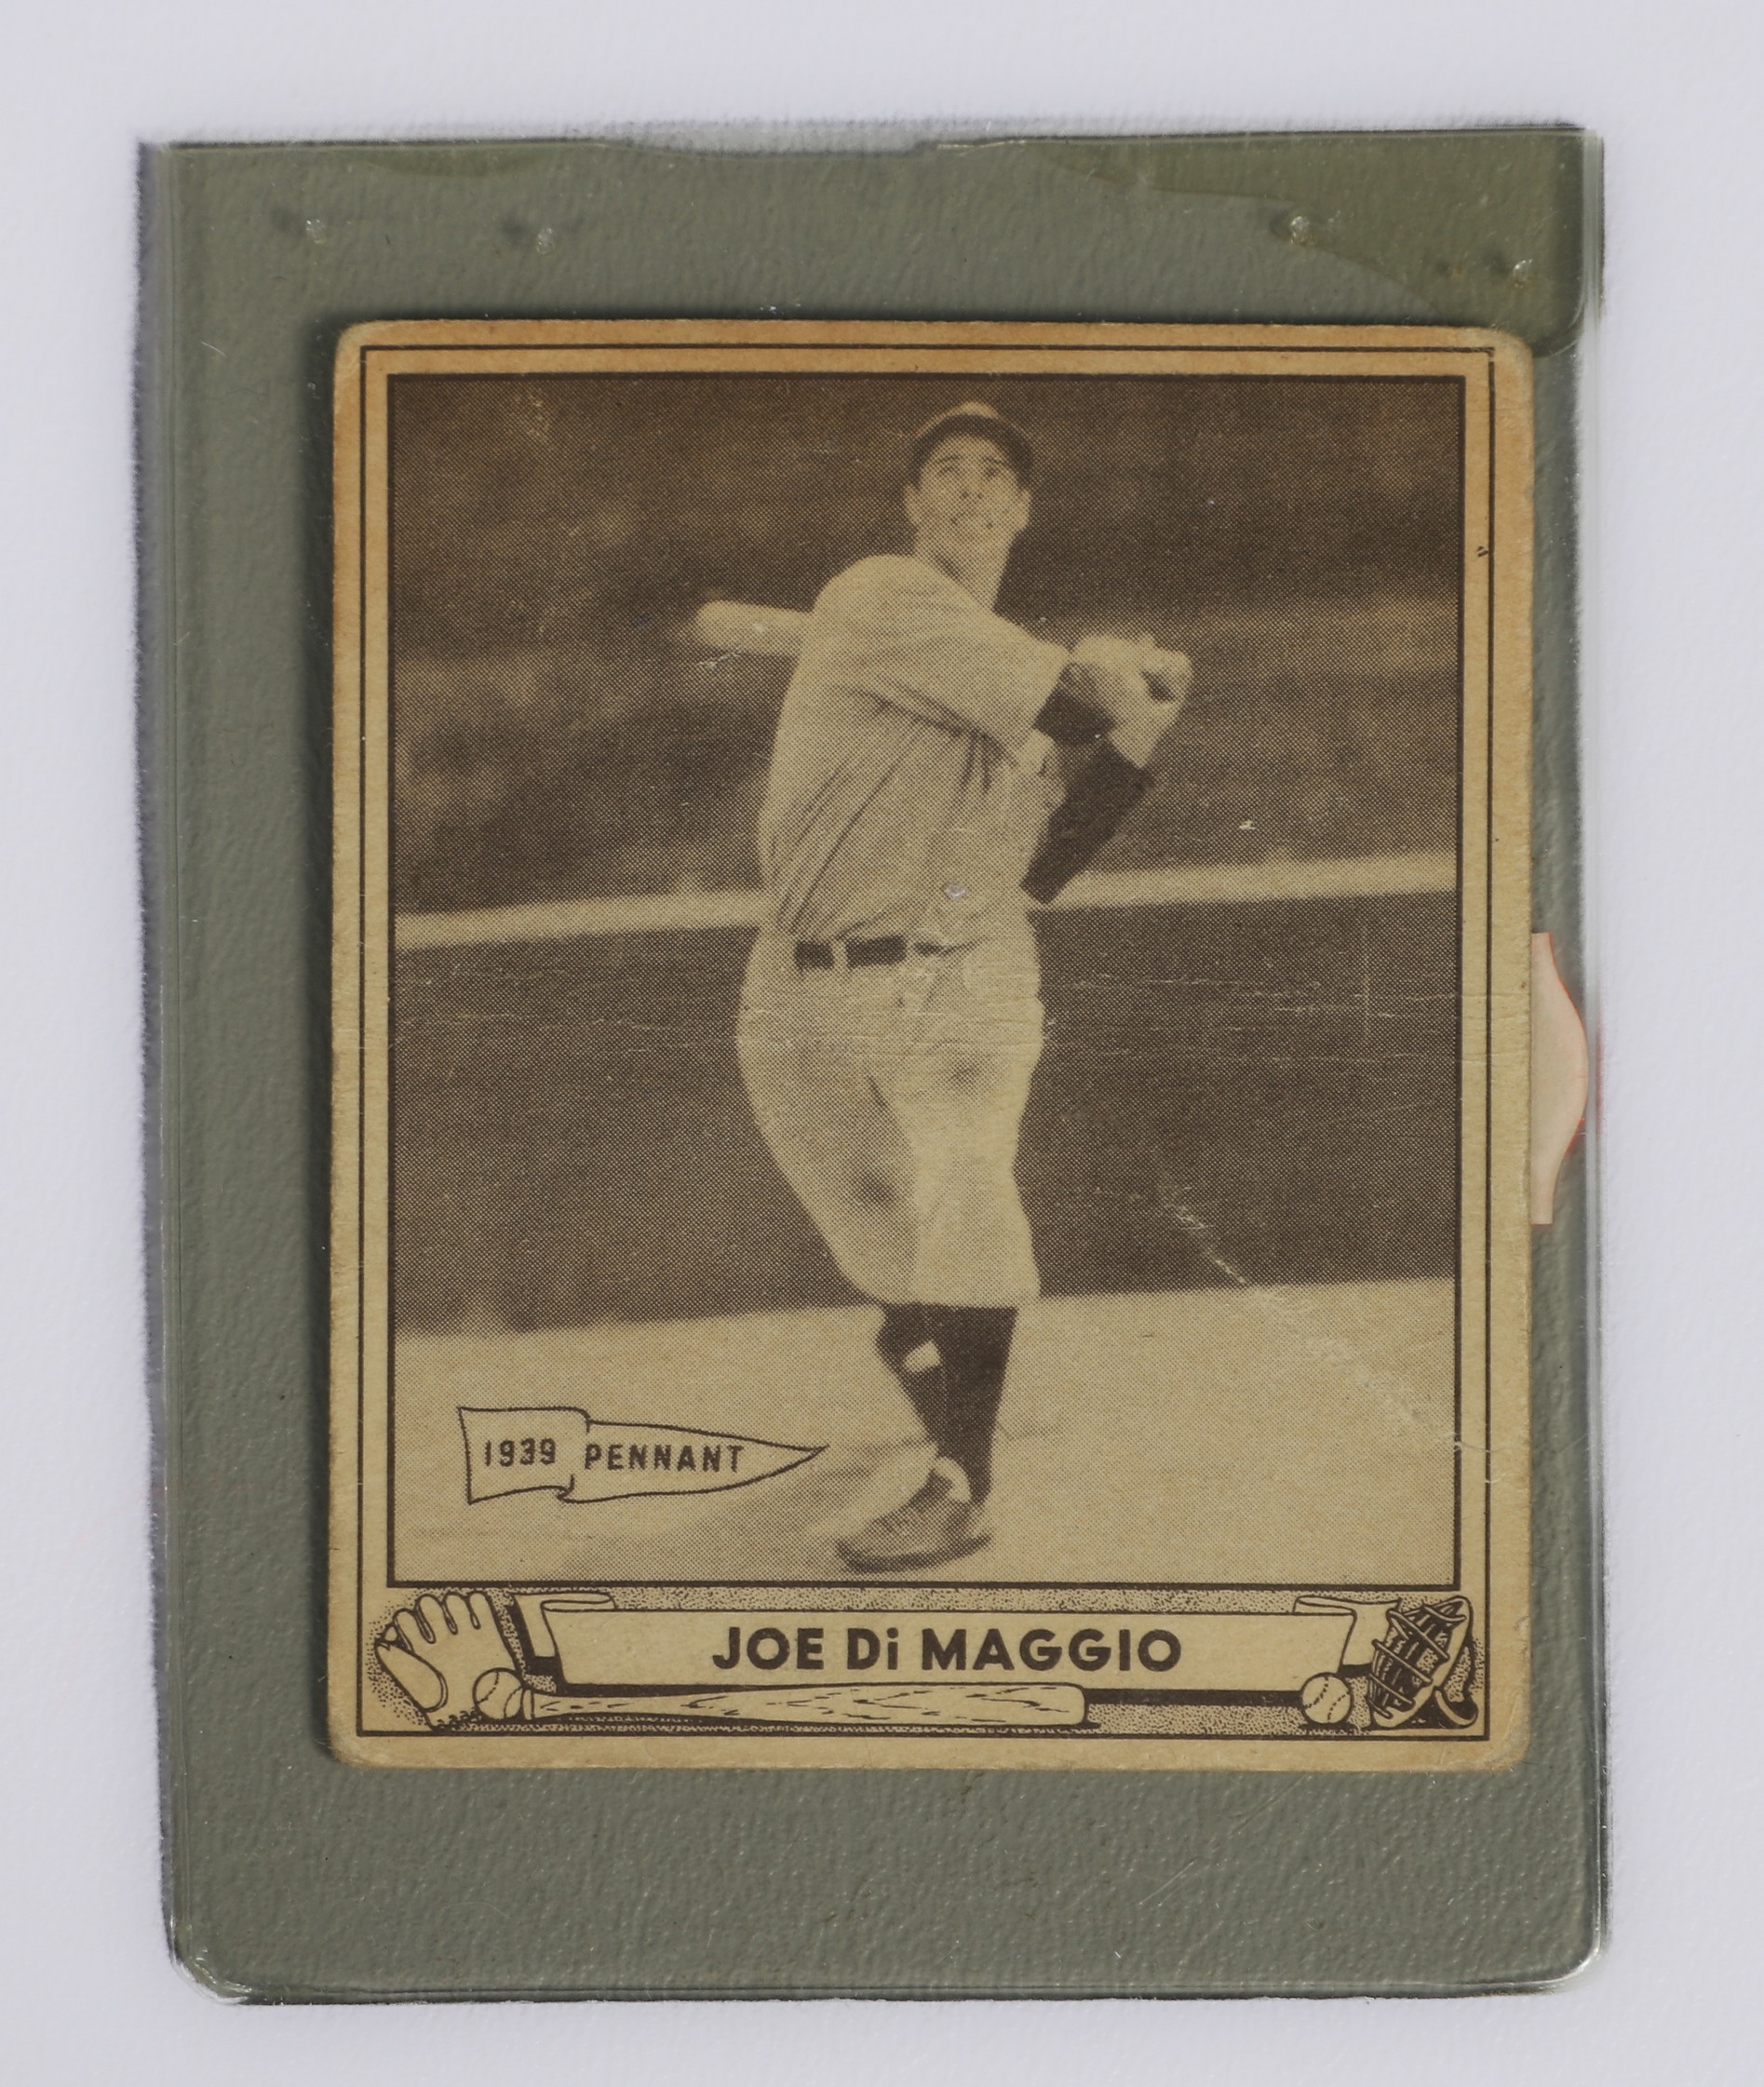 Joe DiMaggio 1940 G+/VG evidence of